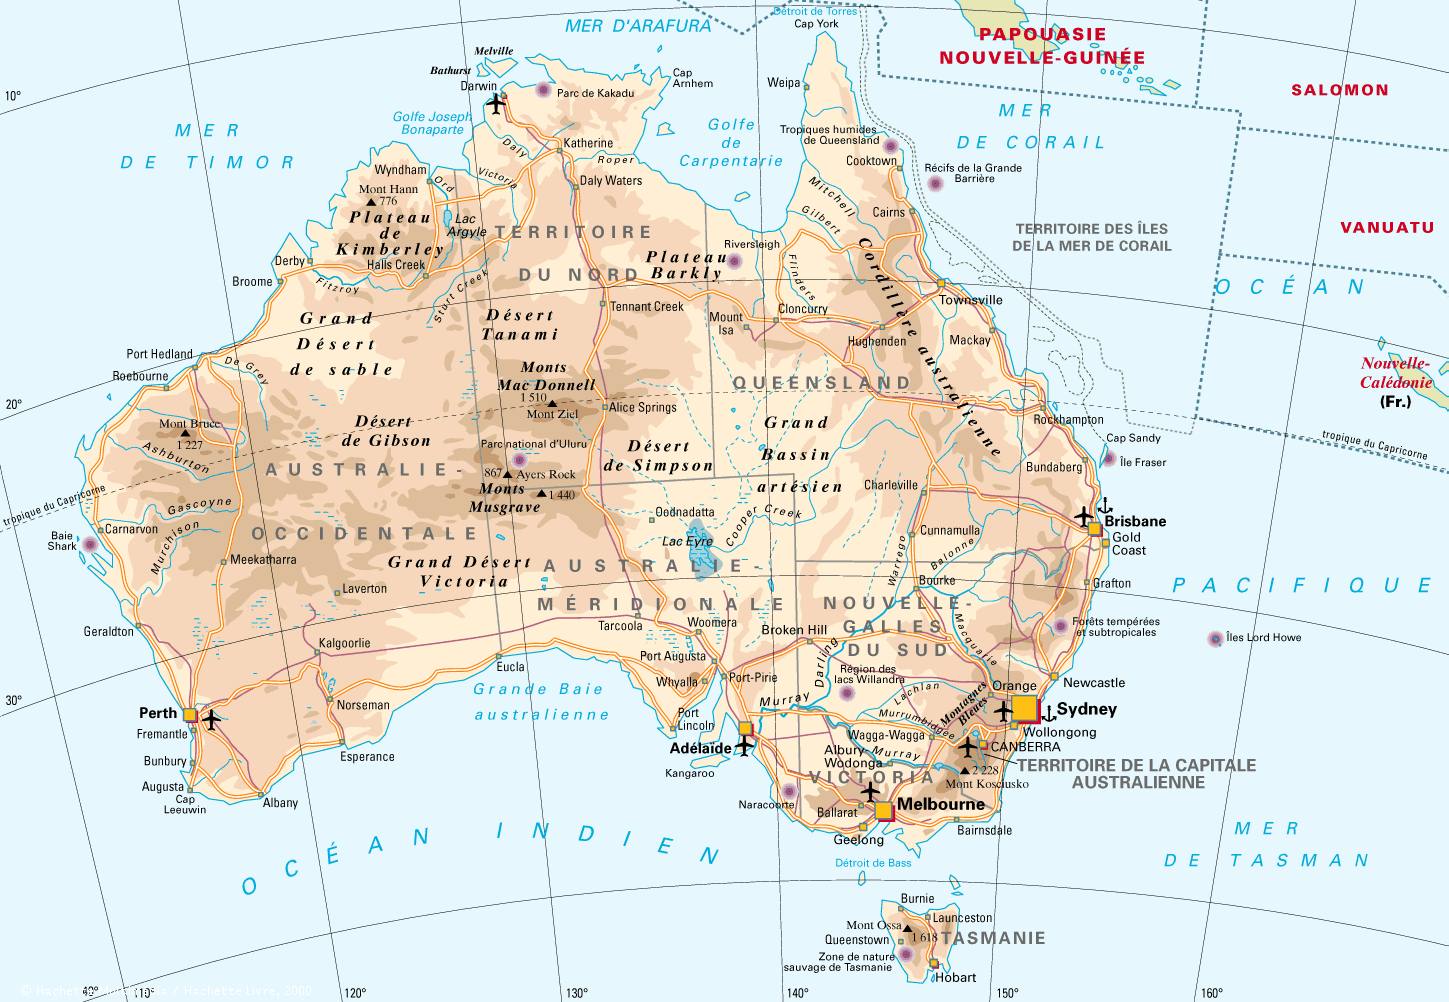 Cartograf.fr : L'Australie